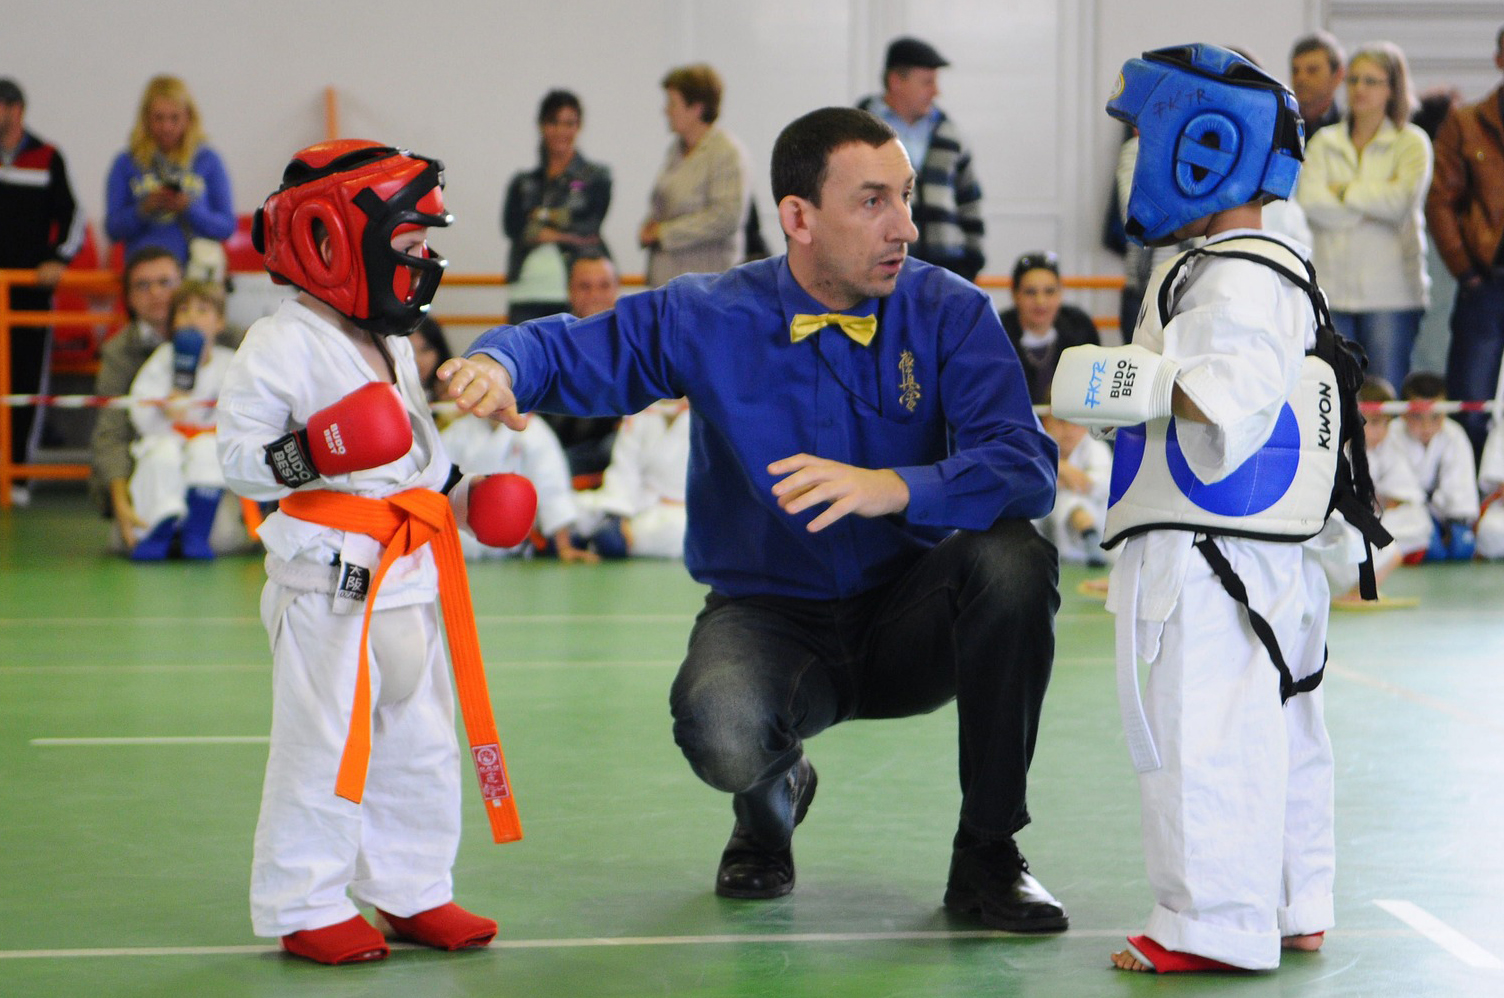 martial arts tournament for kids